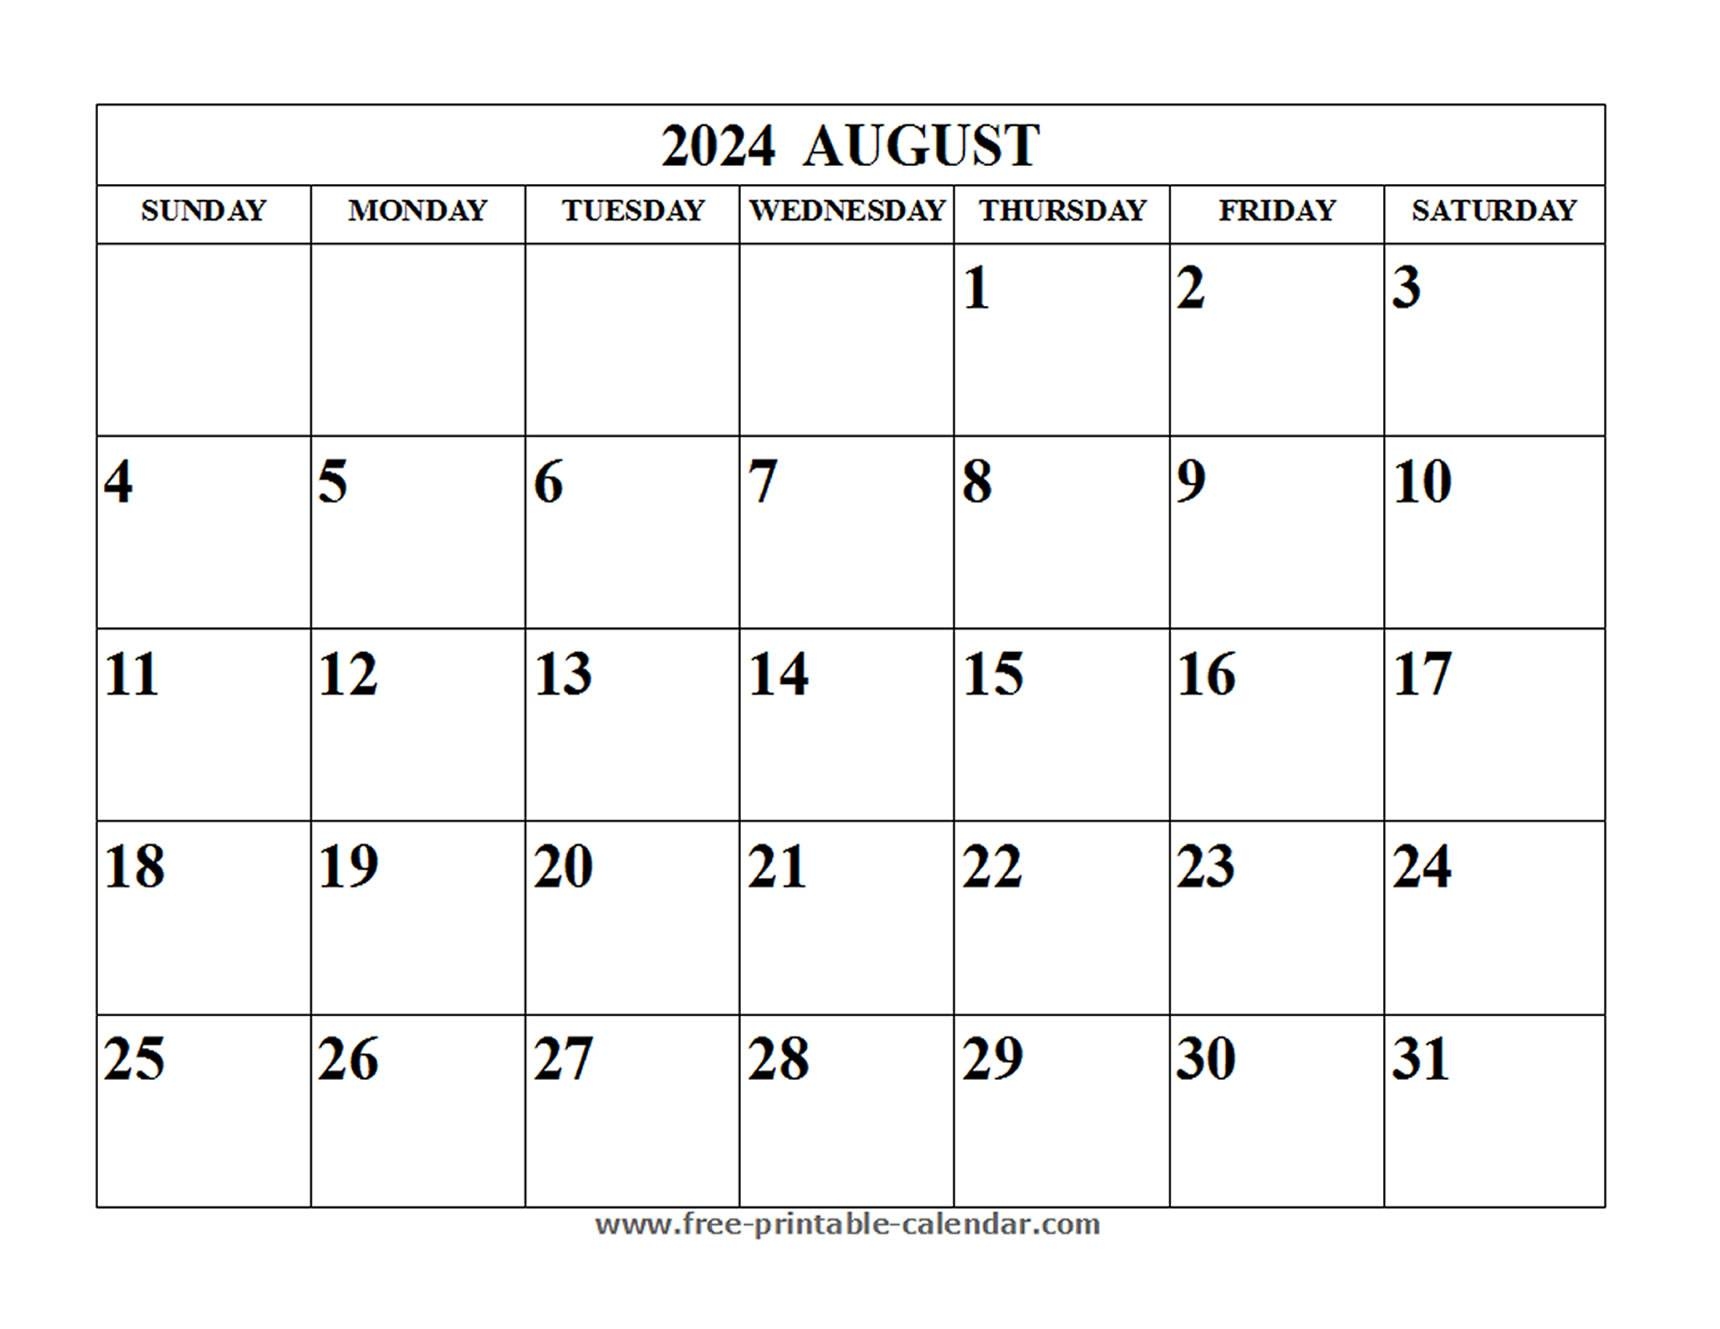 Blank August 2024 Calendar - Free-Printable-Calendar regarding Free Printable Calendar August 2024 To July 202